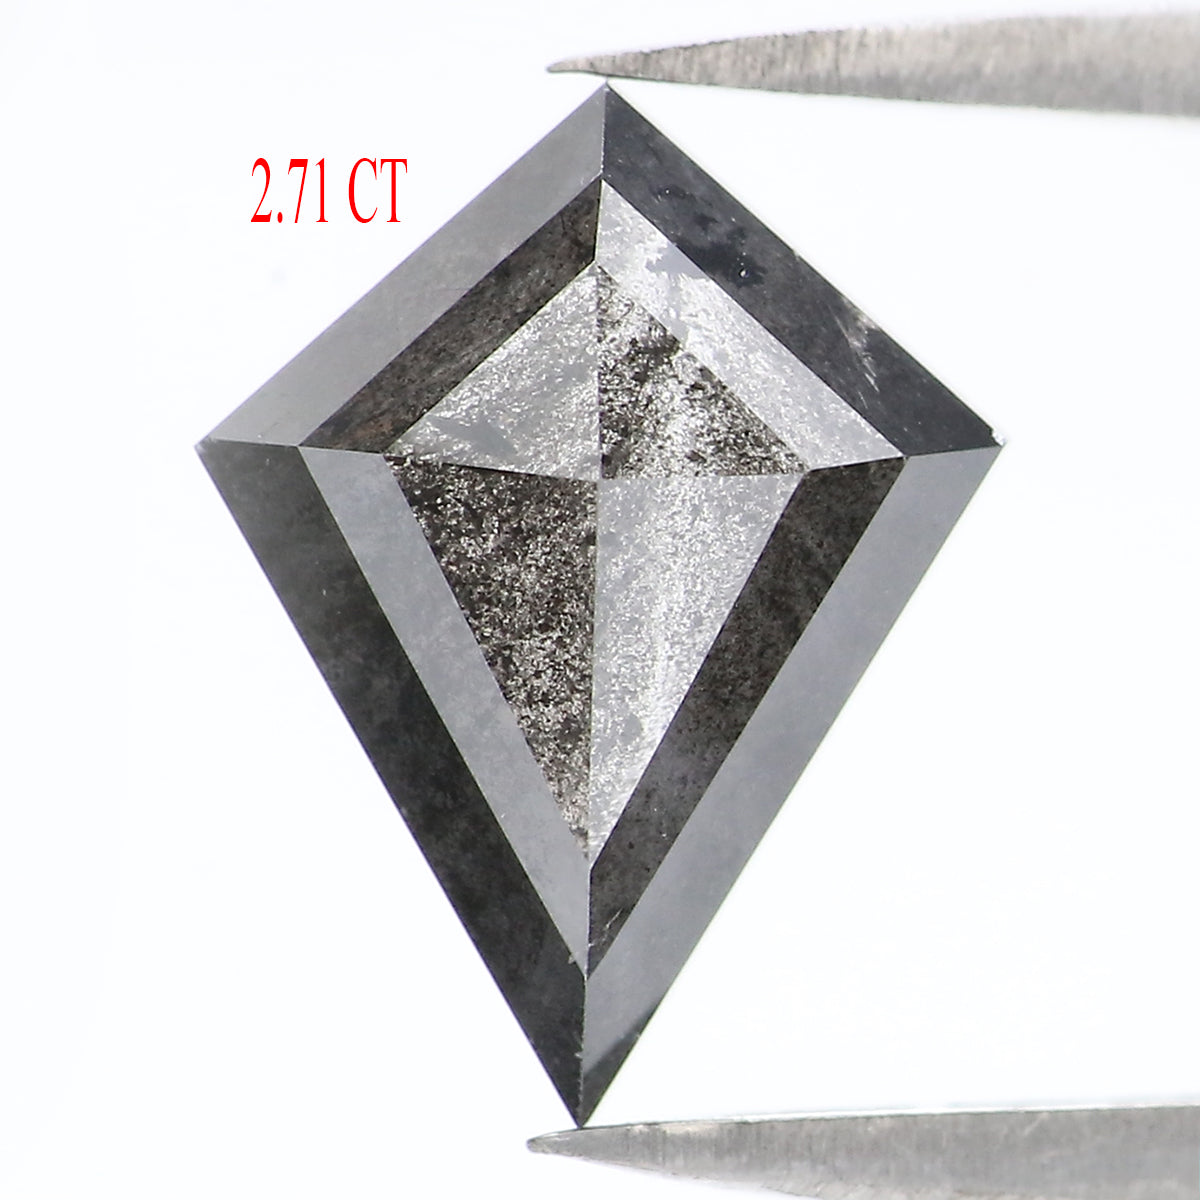 2.71 CT Natural Loose Kite Shape Diamond Salt And Pepper Kite Cut Diamond 12.05 MM Black Grey Color Kite Shape Rose Cut Diamond QL2121